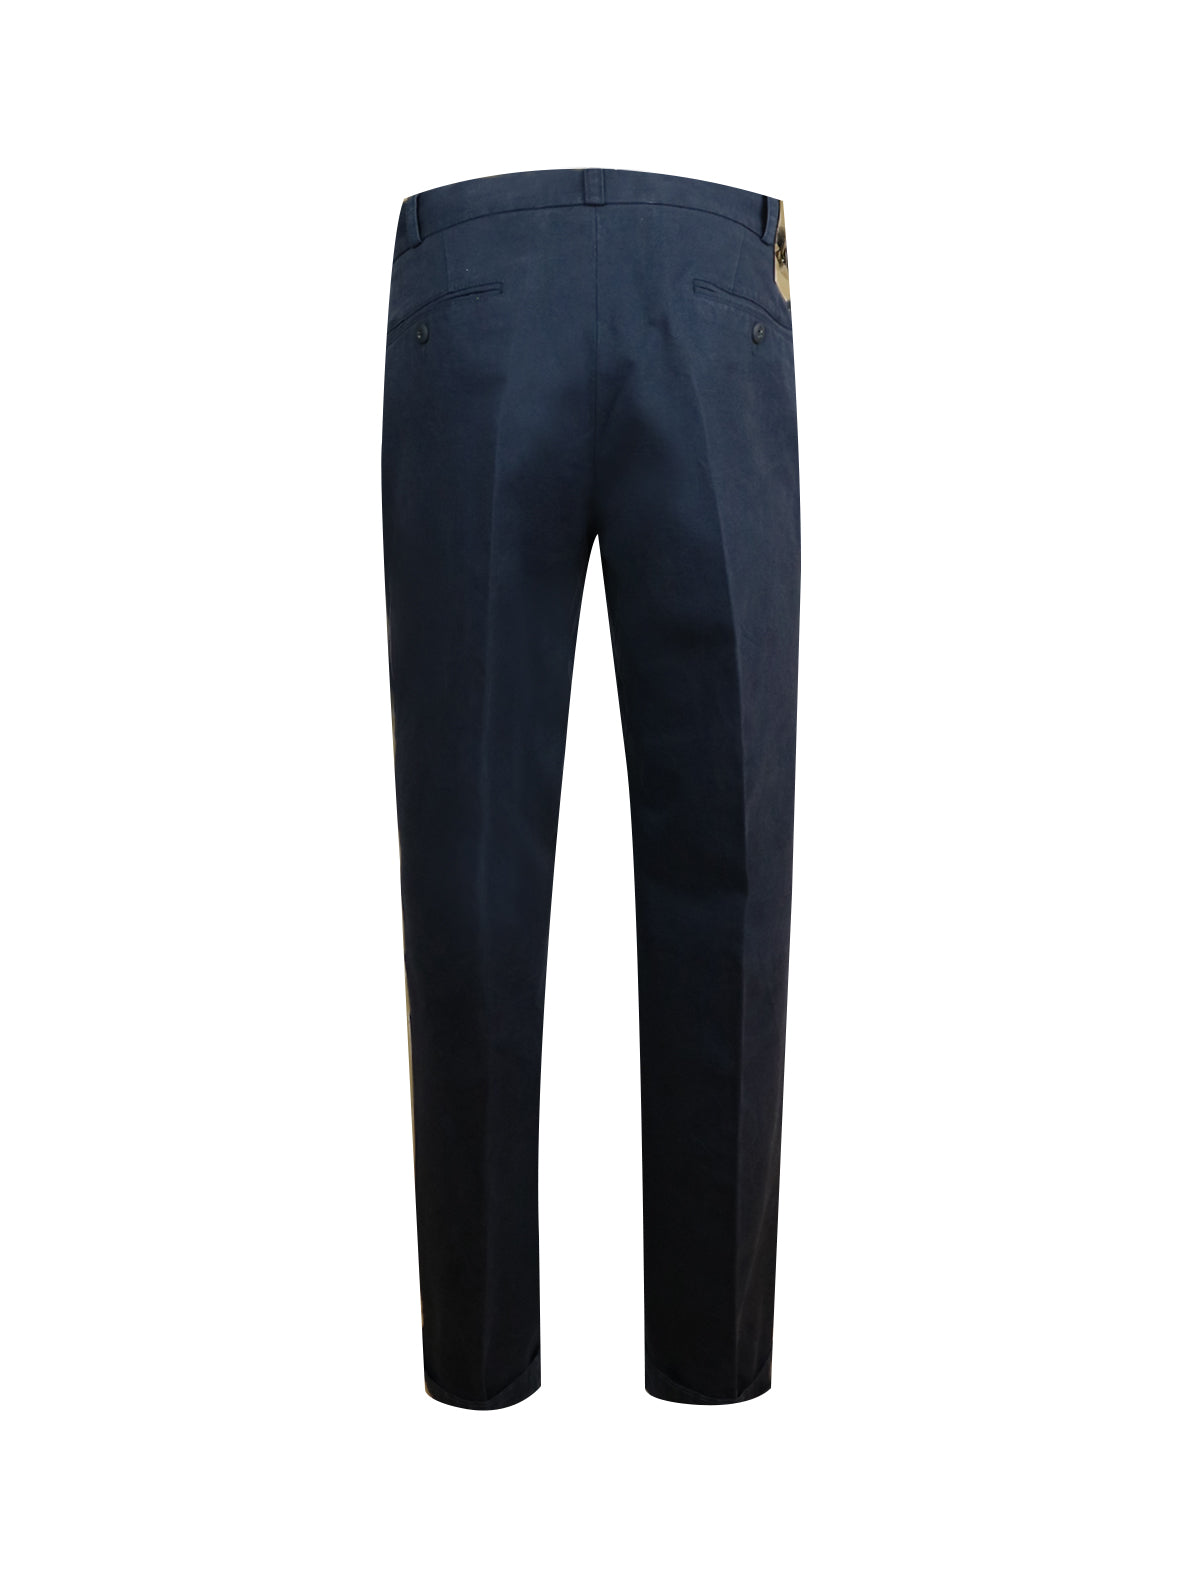 PT Torino Deluxe Cotton Trouser in Navy